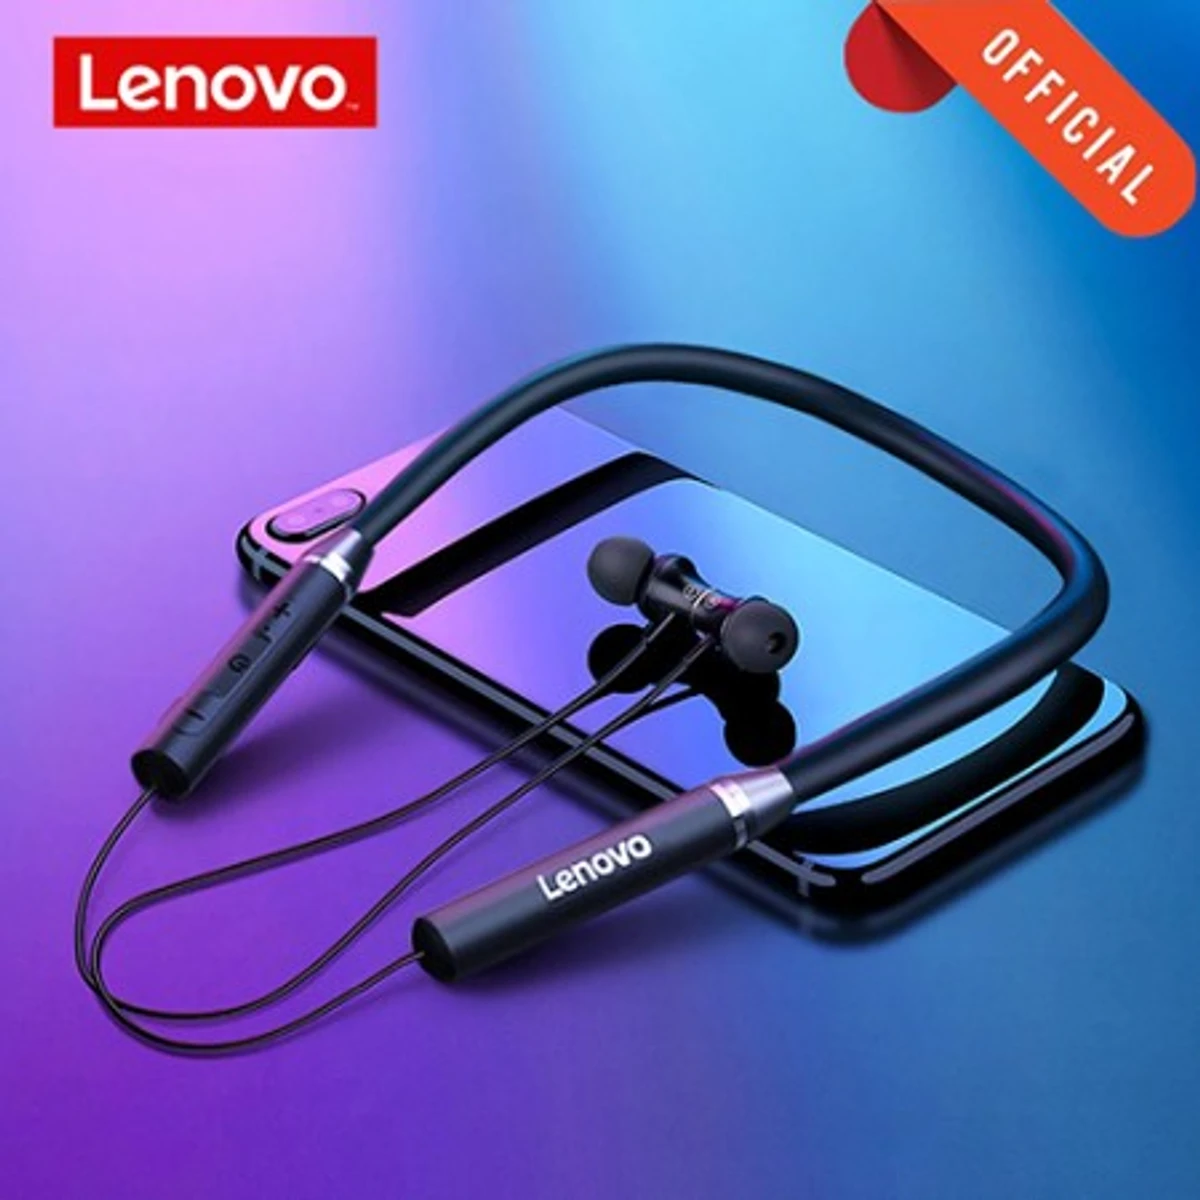 Lenovo HE05 Bluetooth Wireless Neckband Headphones